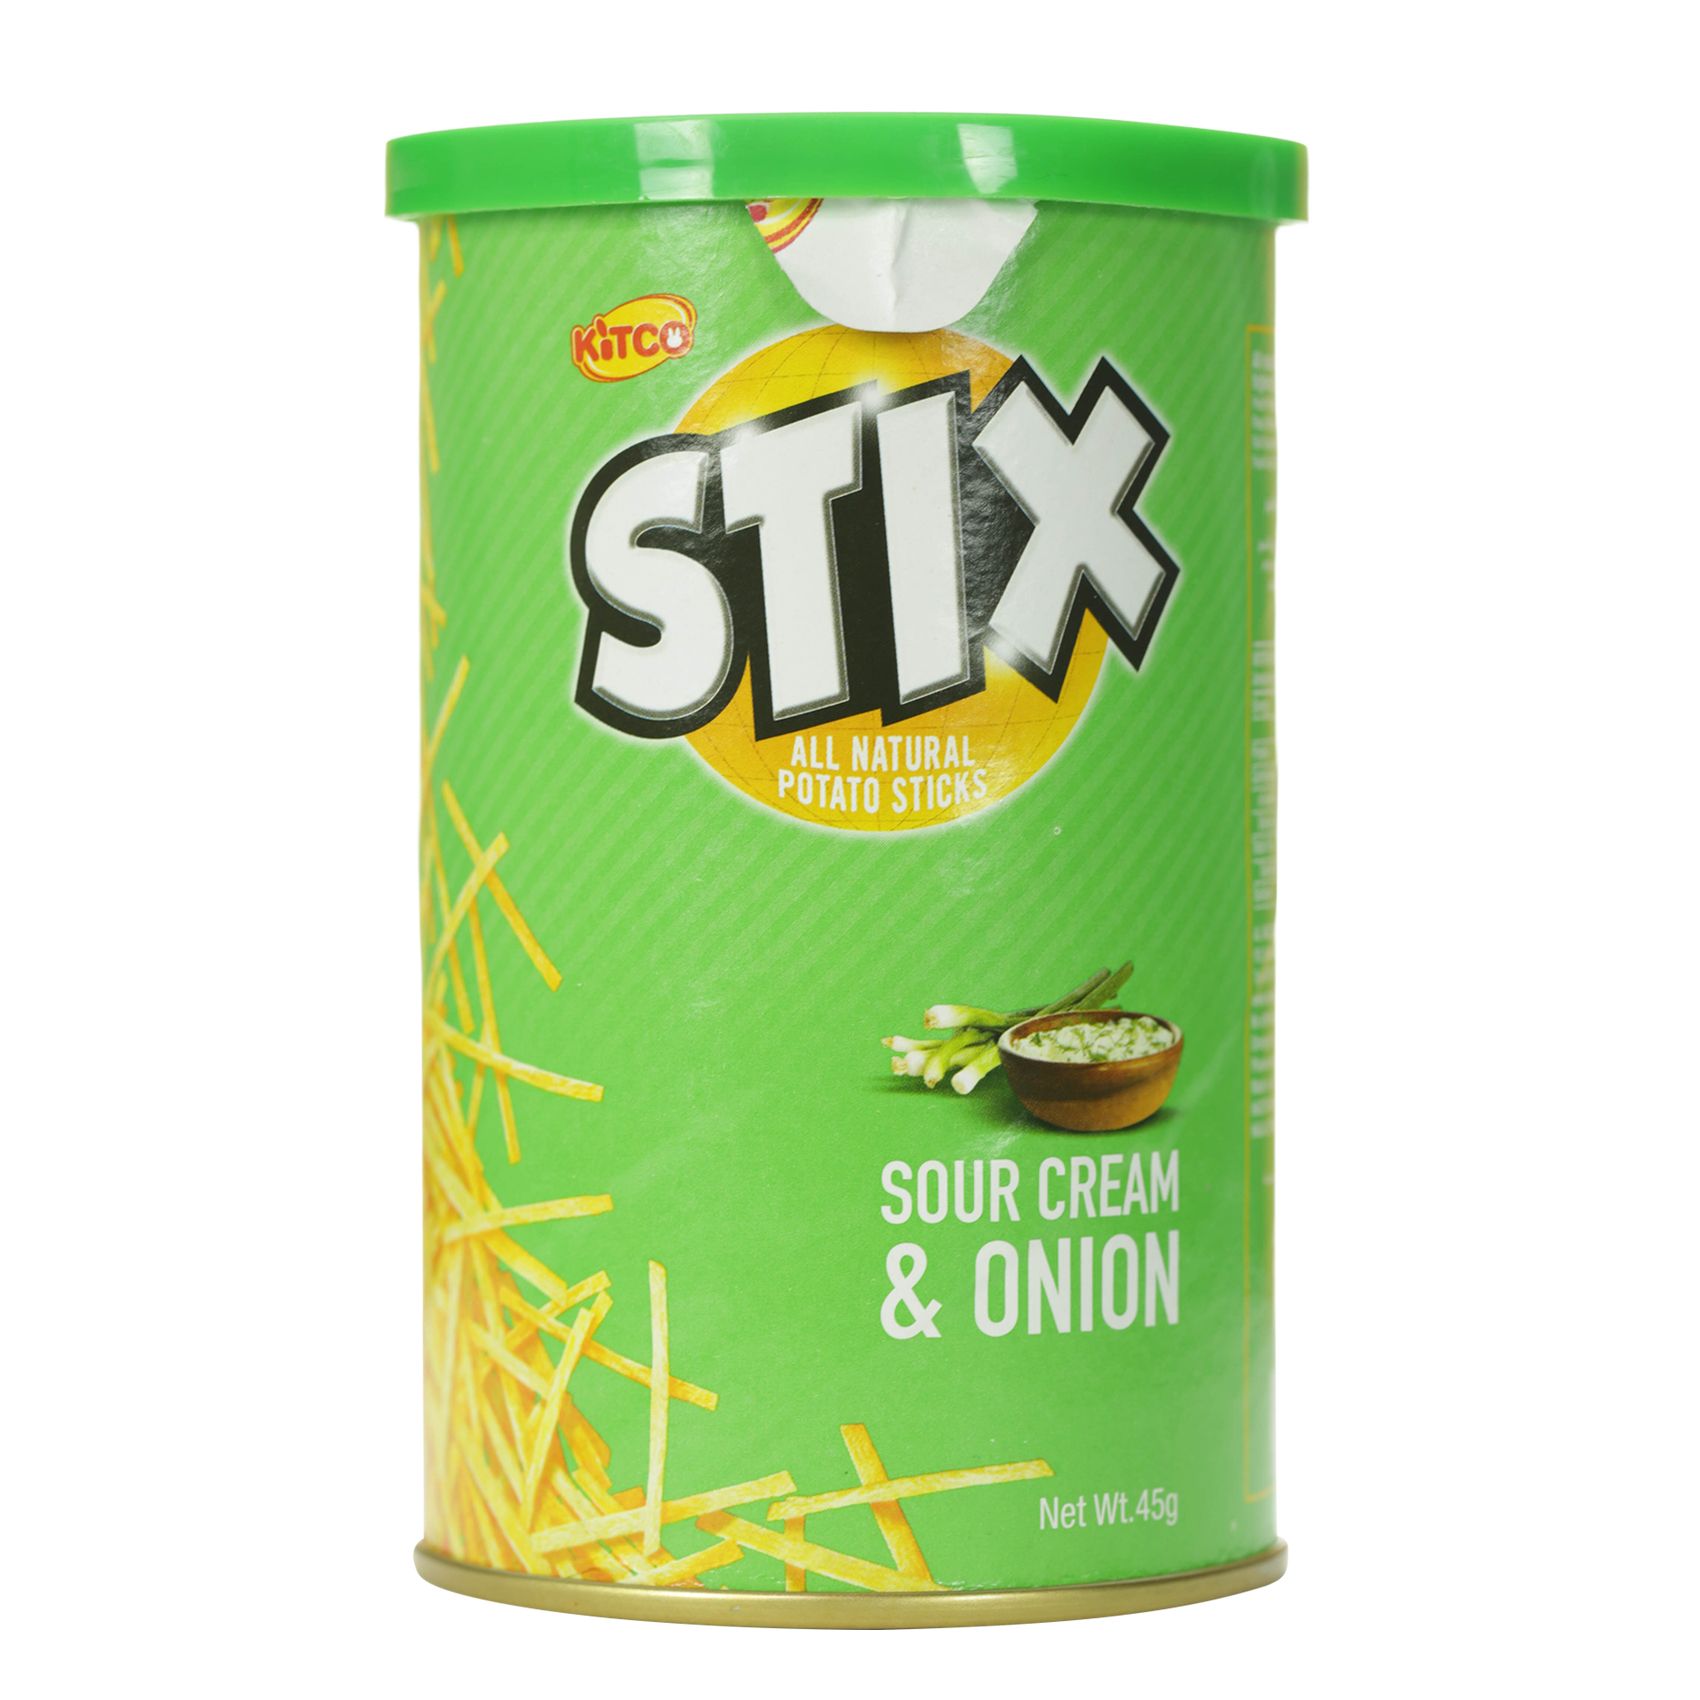 Kitco Stix Sour Cream And Onion 45g